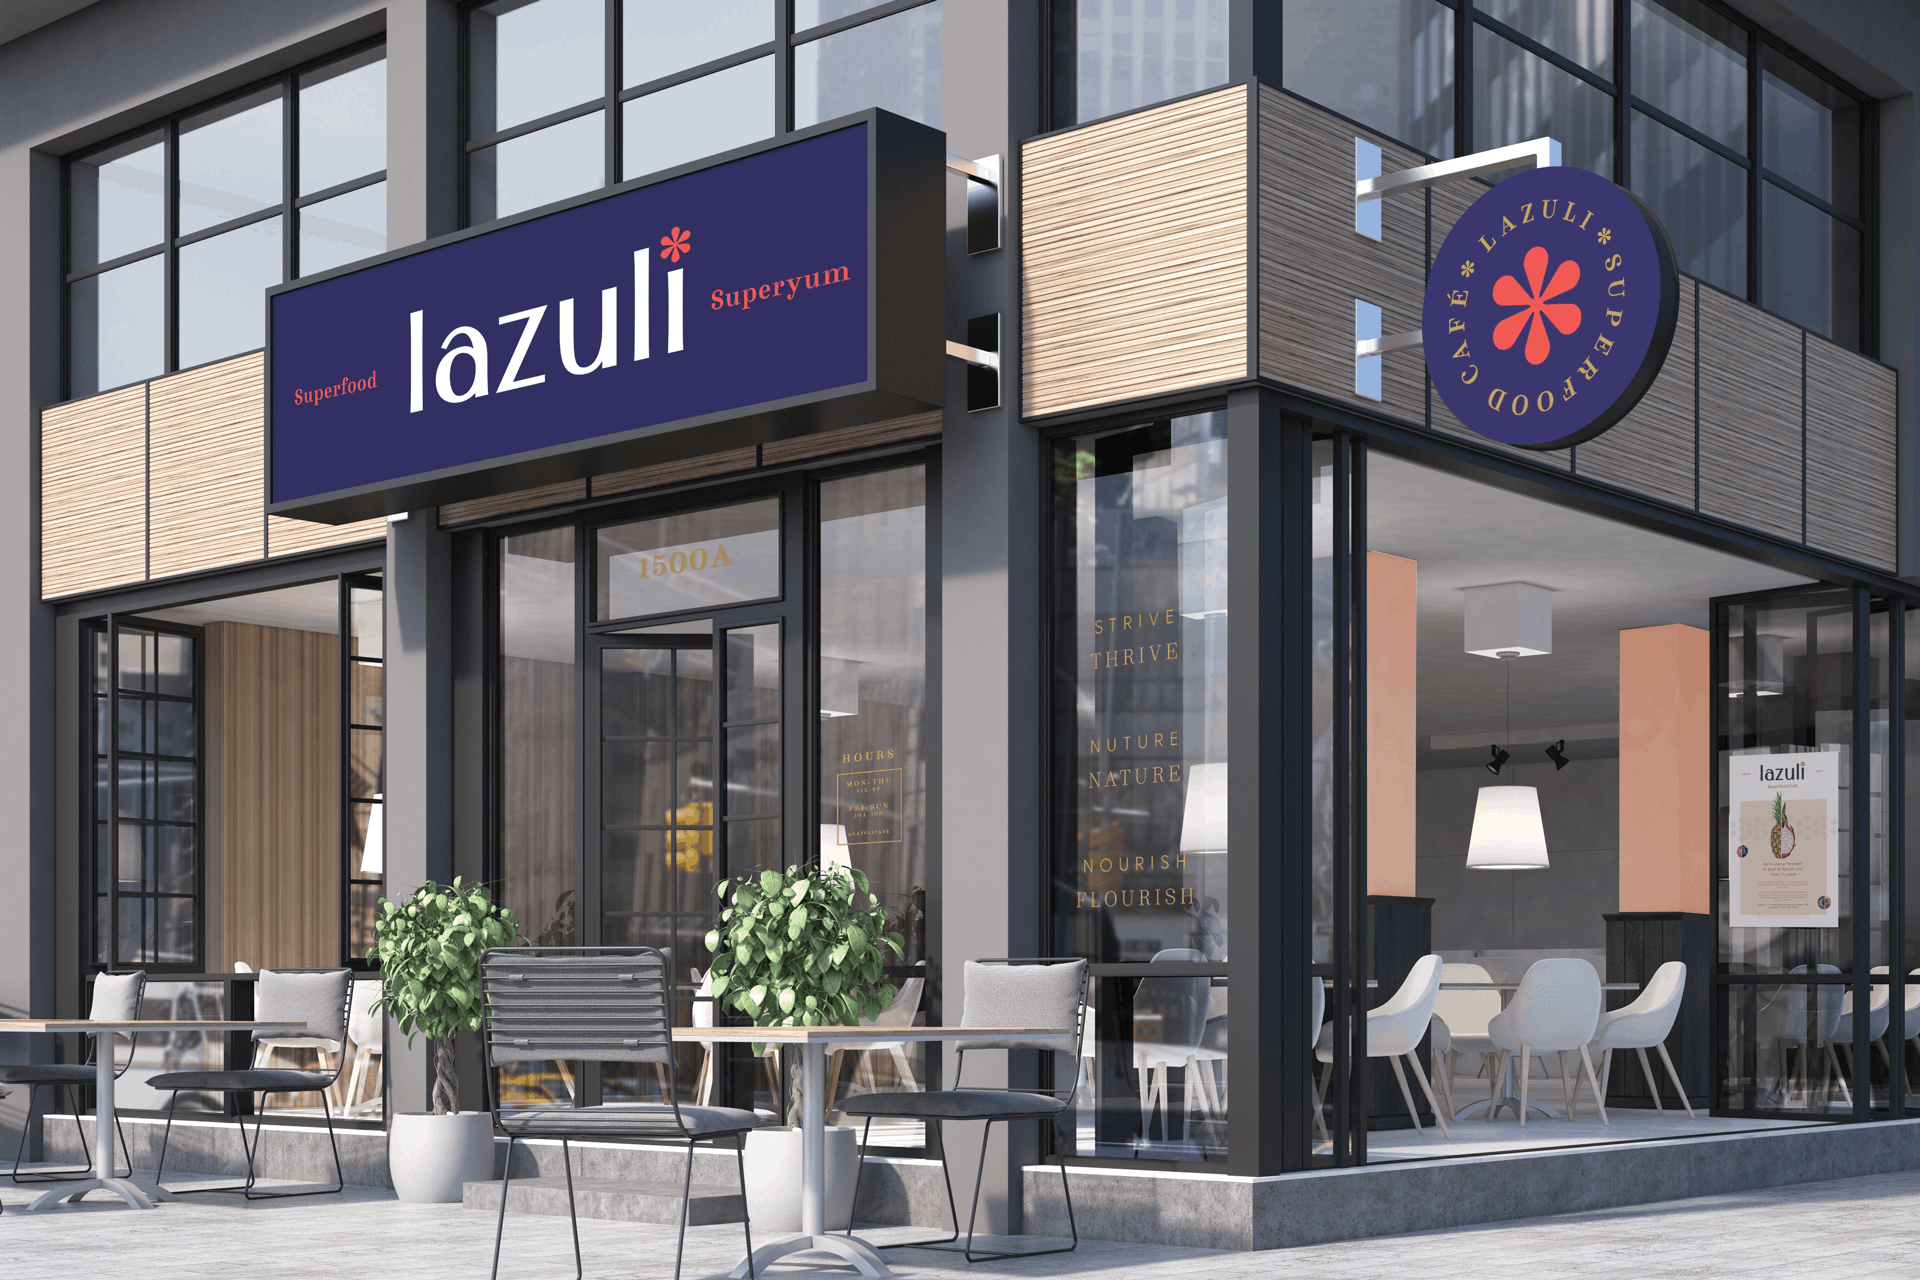 Lazuli acai bowl superfood cafe branding, naming & design - Vigor